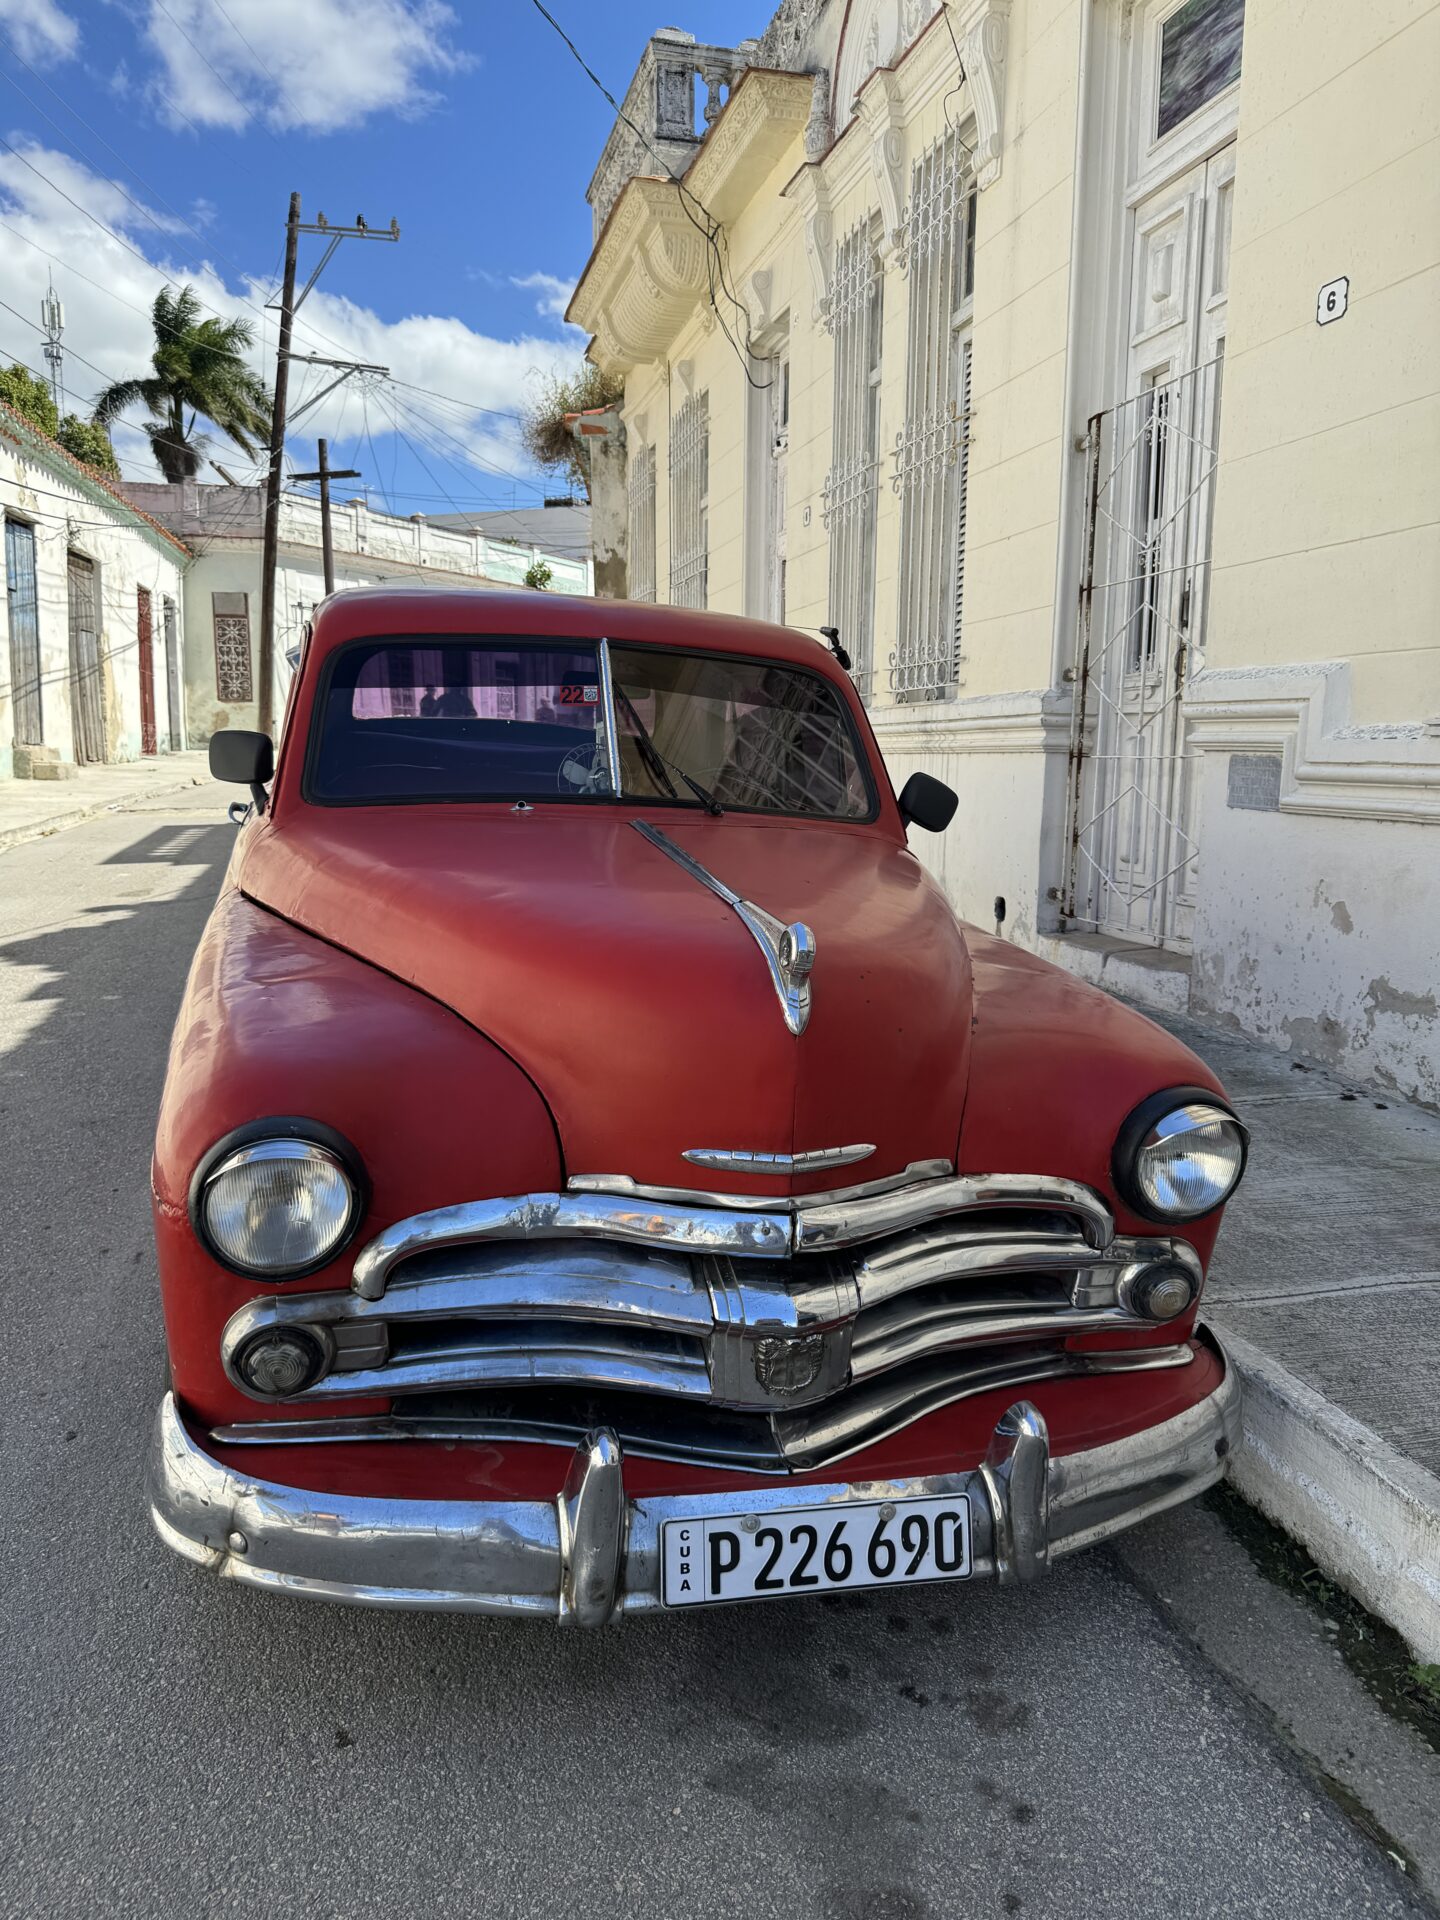 Large red classic automobile set against backdrop of Regla neighborhood in Havana, Cuba, by Carol Schiraldi of Carol's Little World 